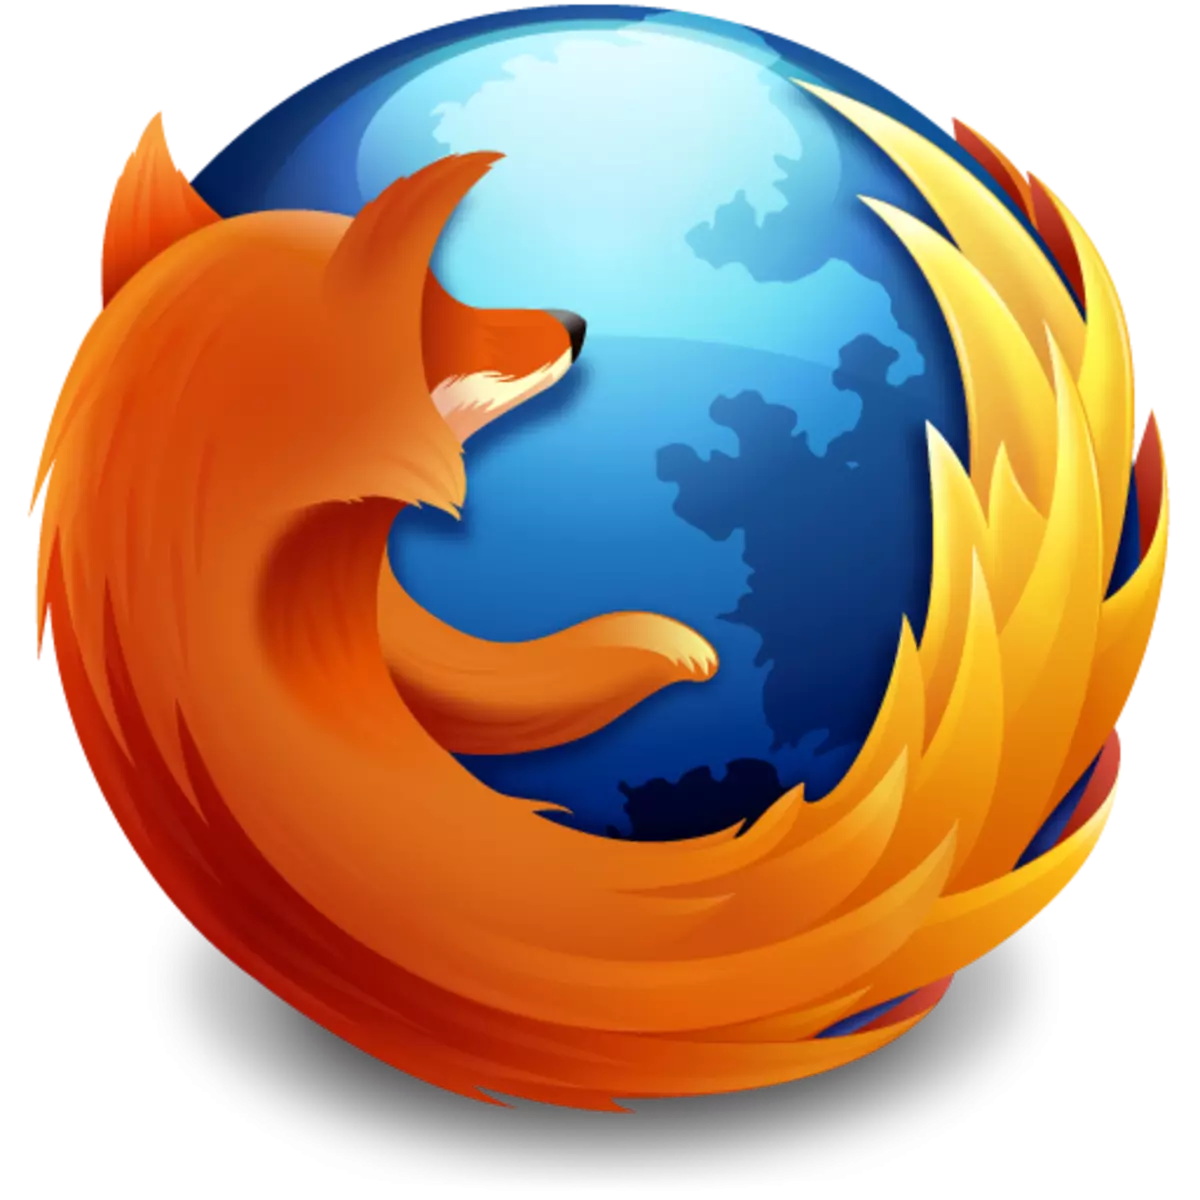 Firefox ບໍ່ໄດ້ຖືກປັບປຸງ. ພວກເຮົາແກ້ໄຂບັນຫາ